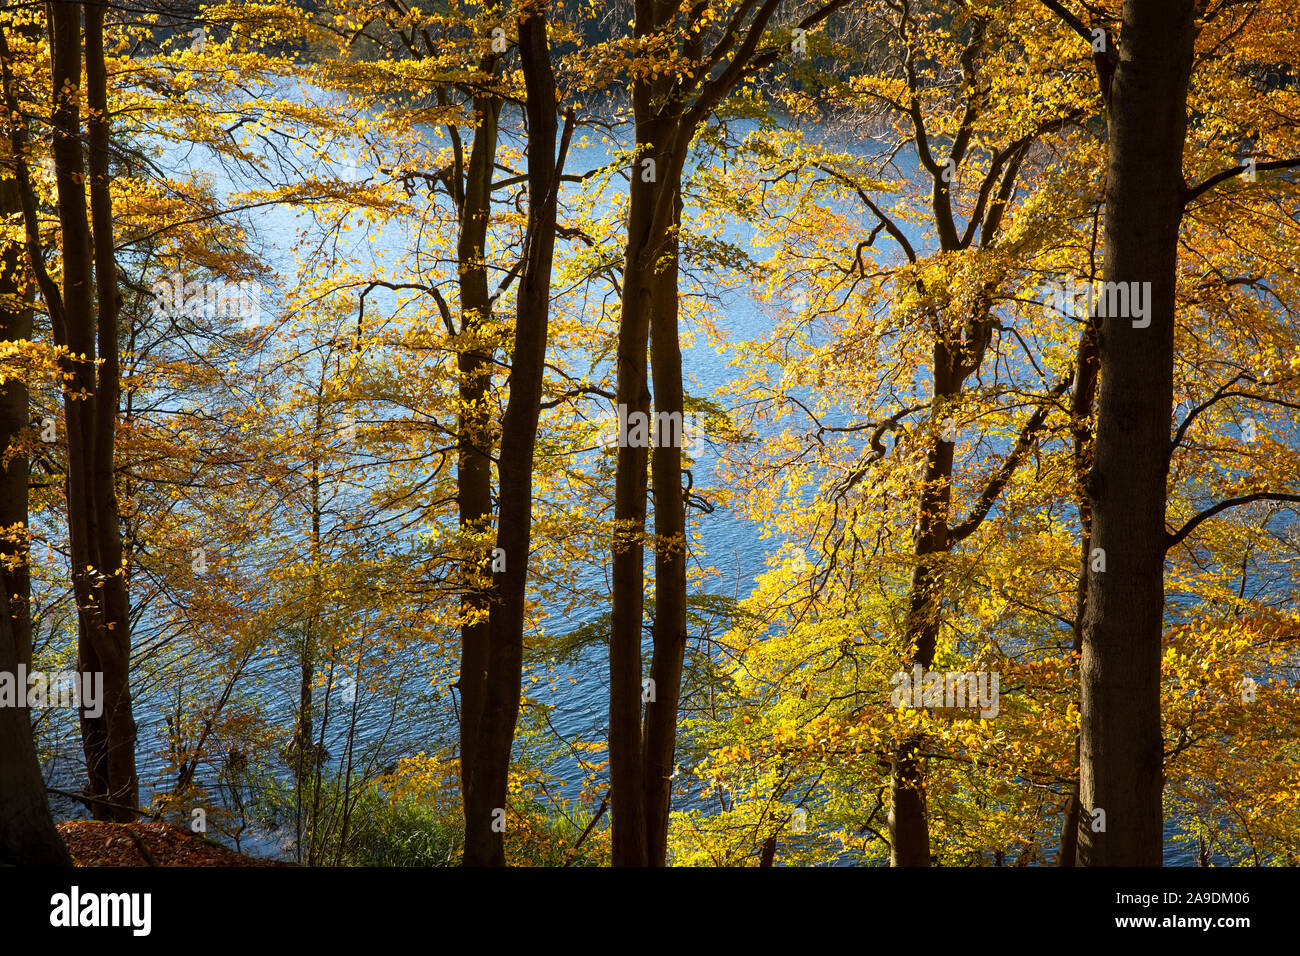 Germany, Mecklenburg-Western Pomerania, Schwerin, Neumühler See, beeches in autumn on the steep bank Stock Photo